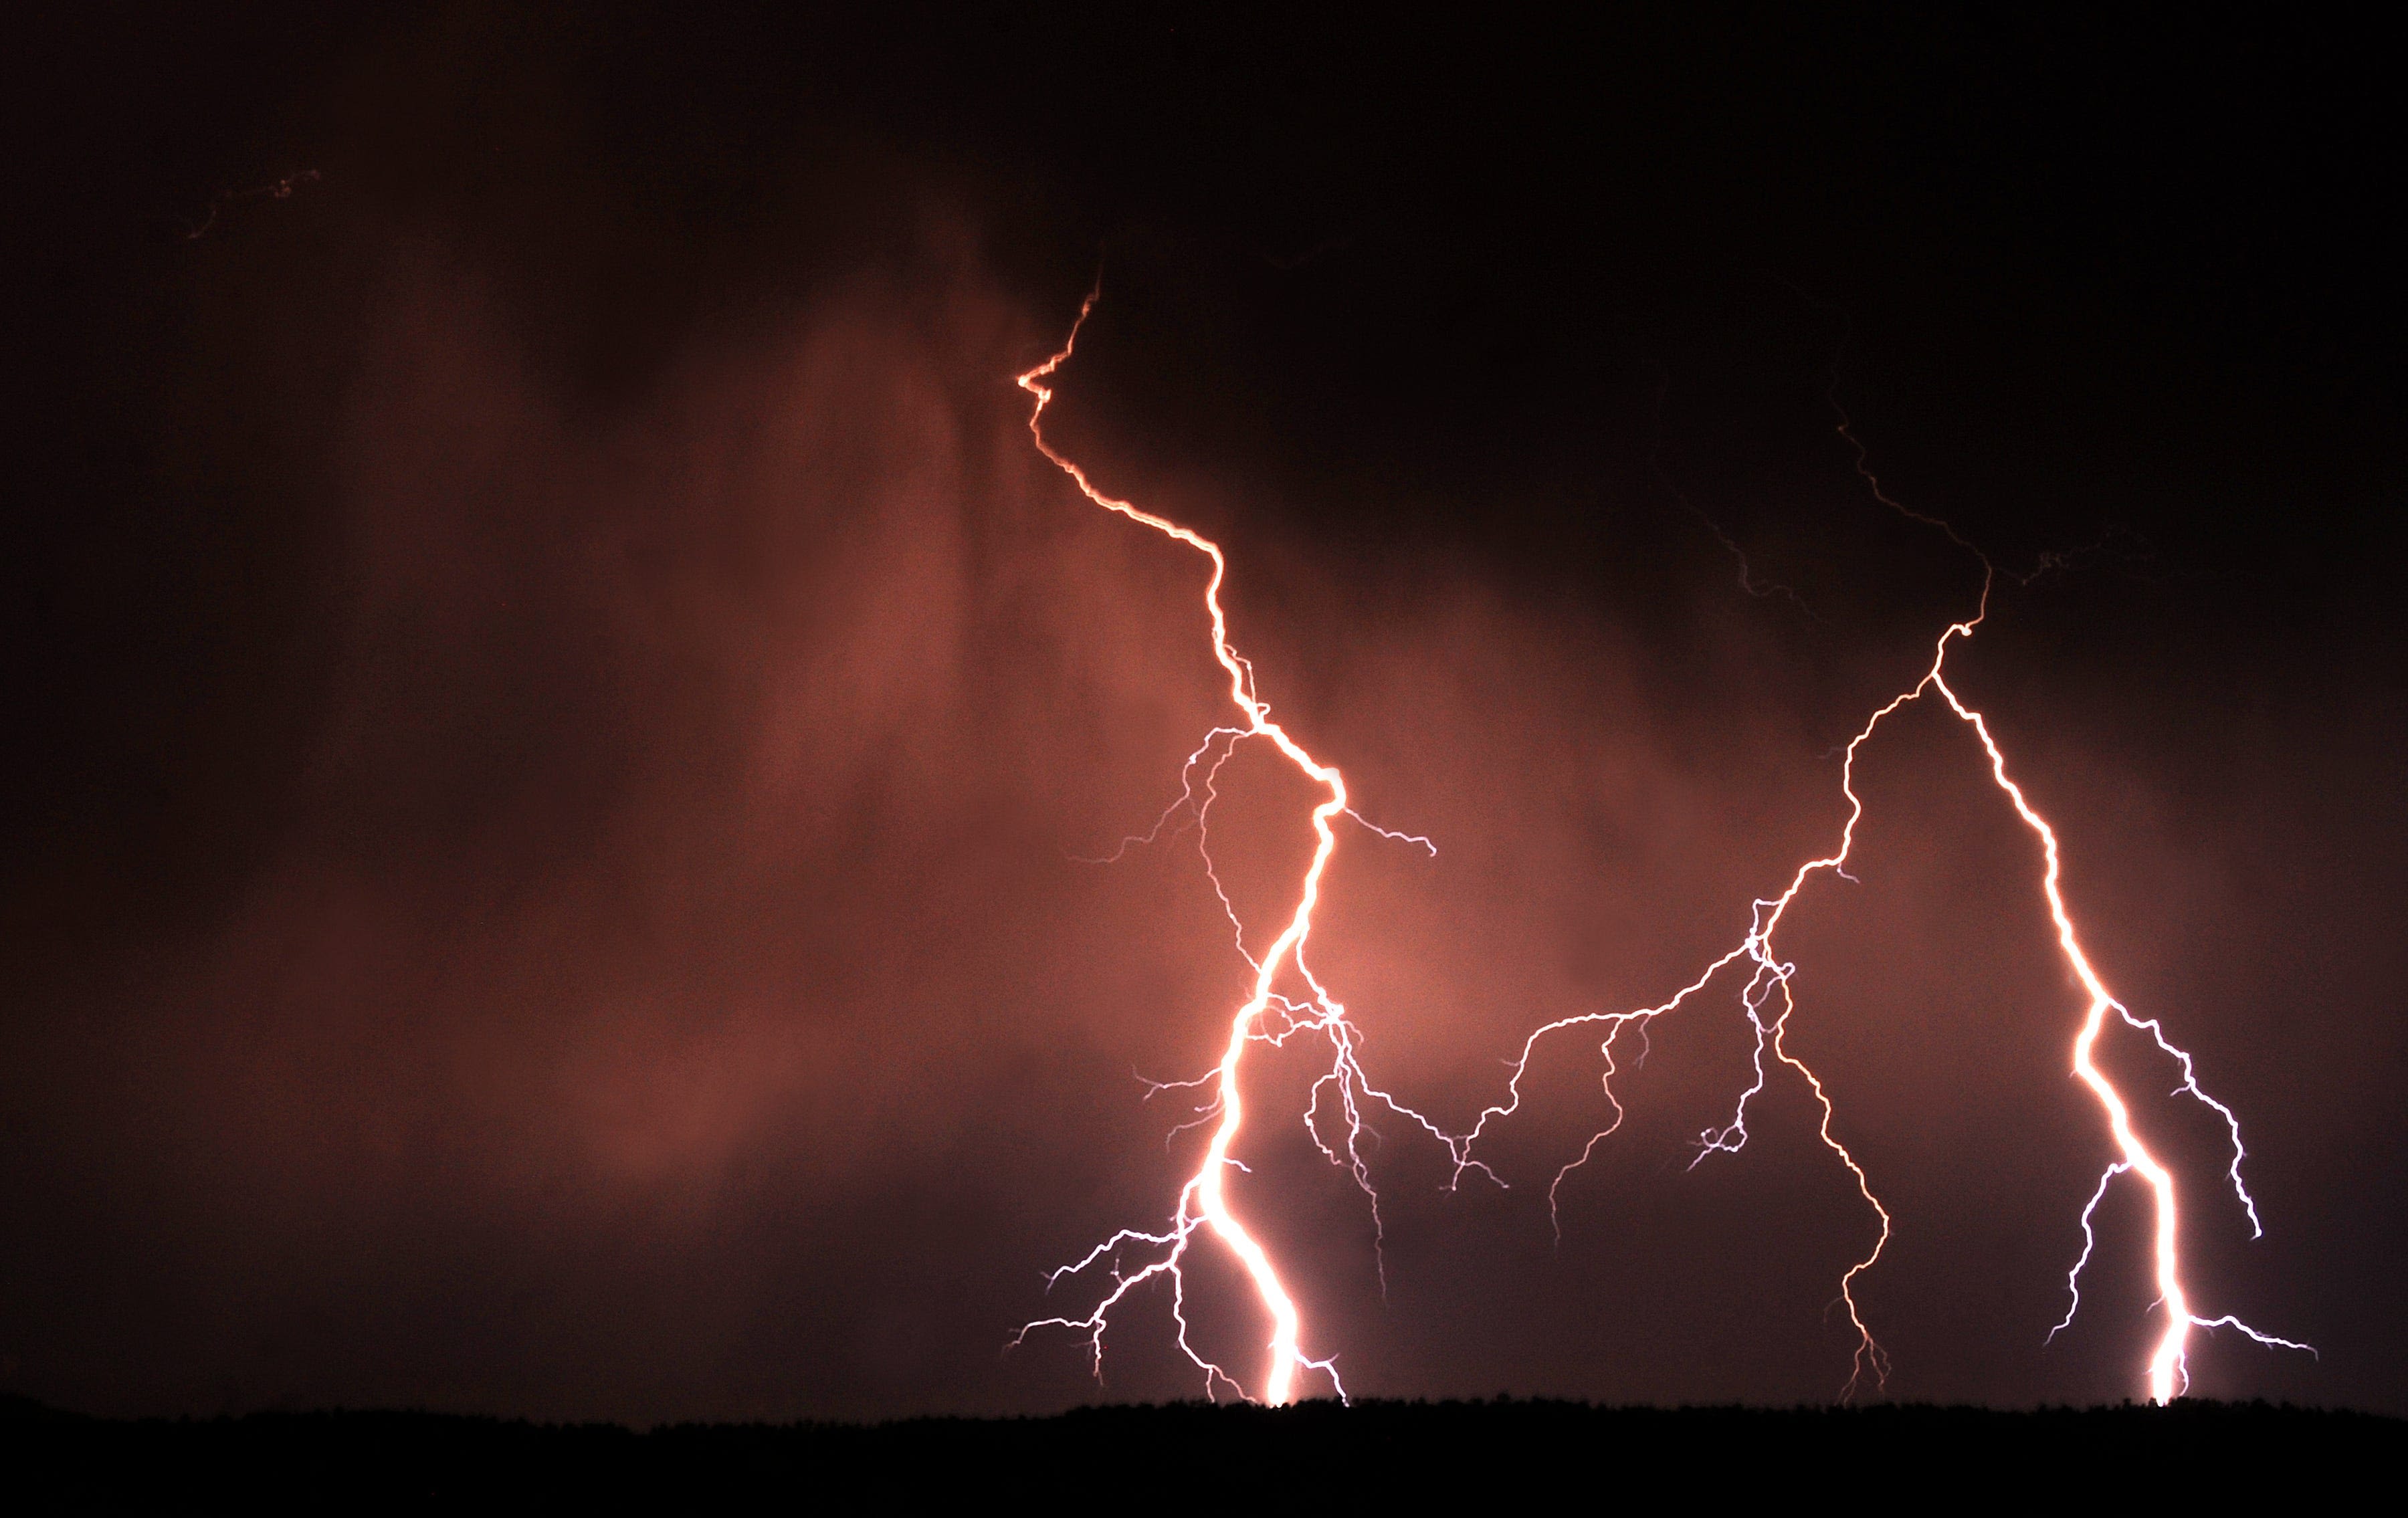 Colorado lightning death is reminder of dangers as storm season arrives